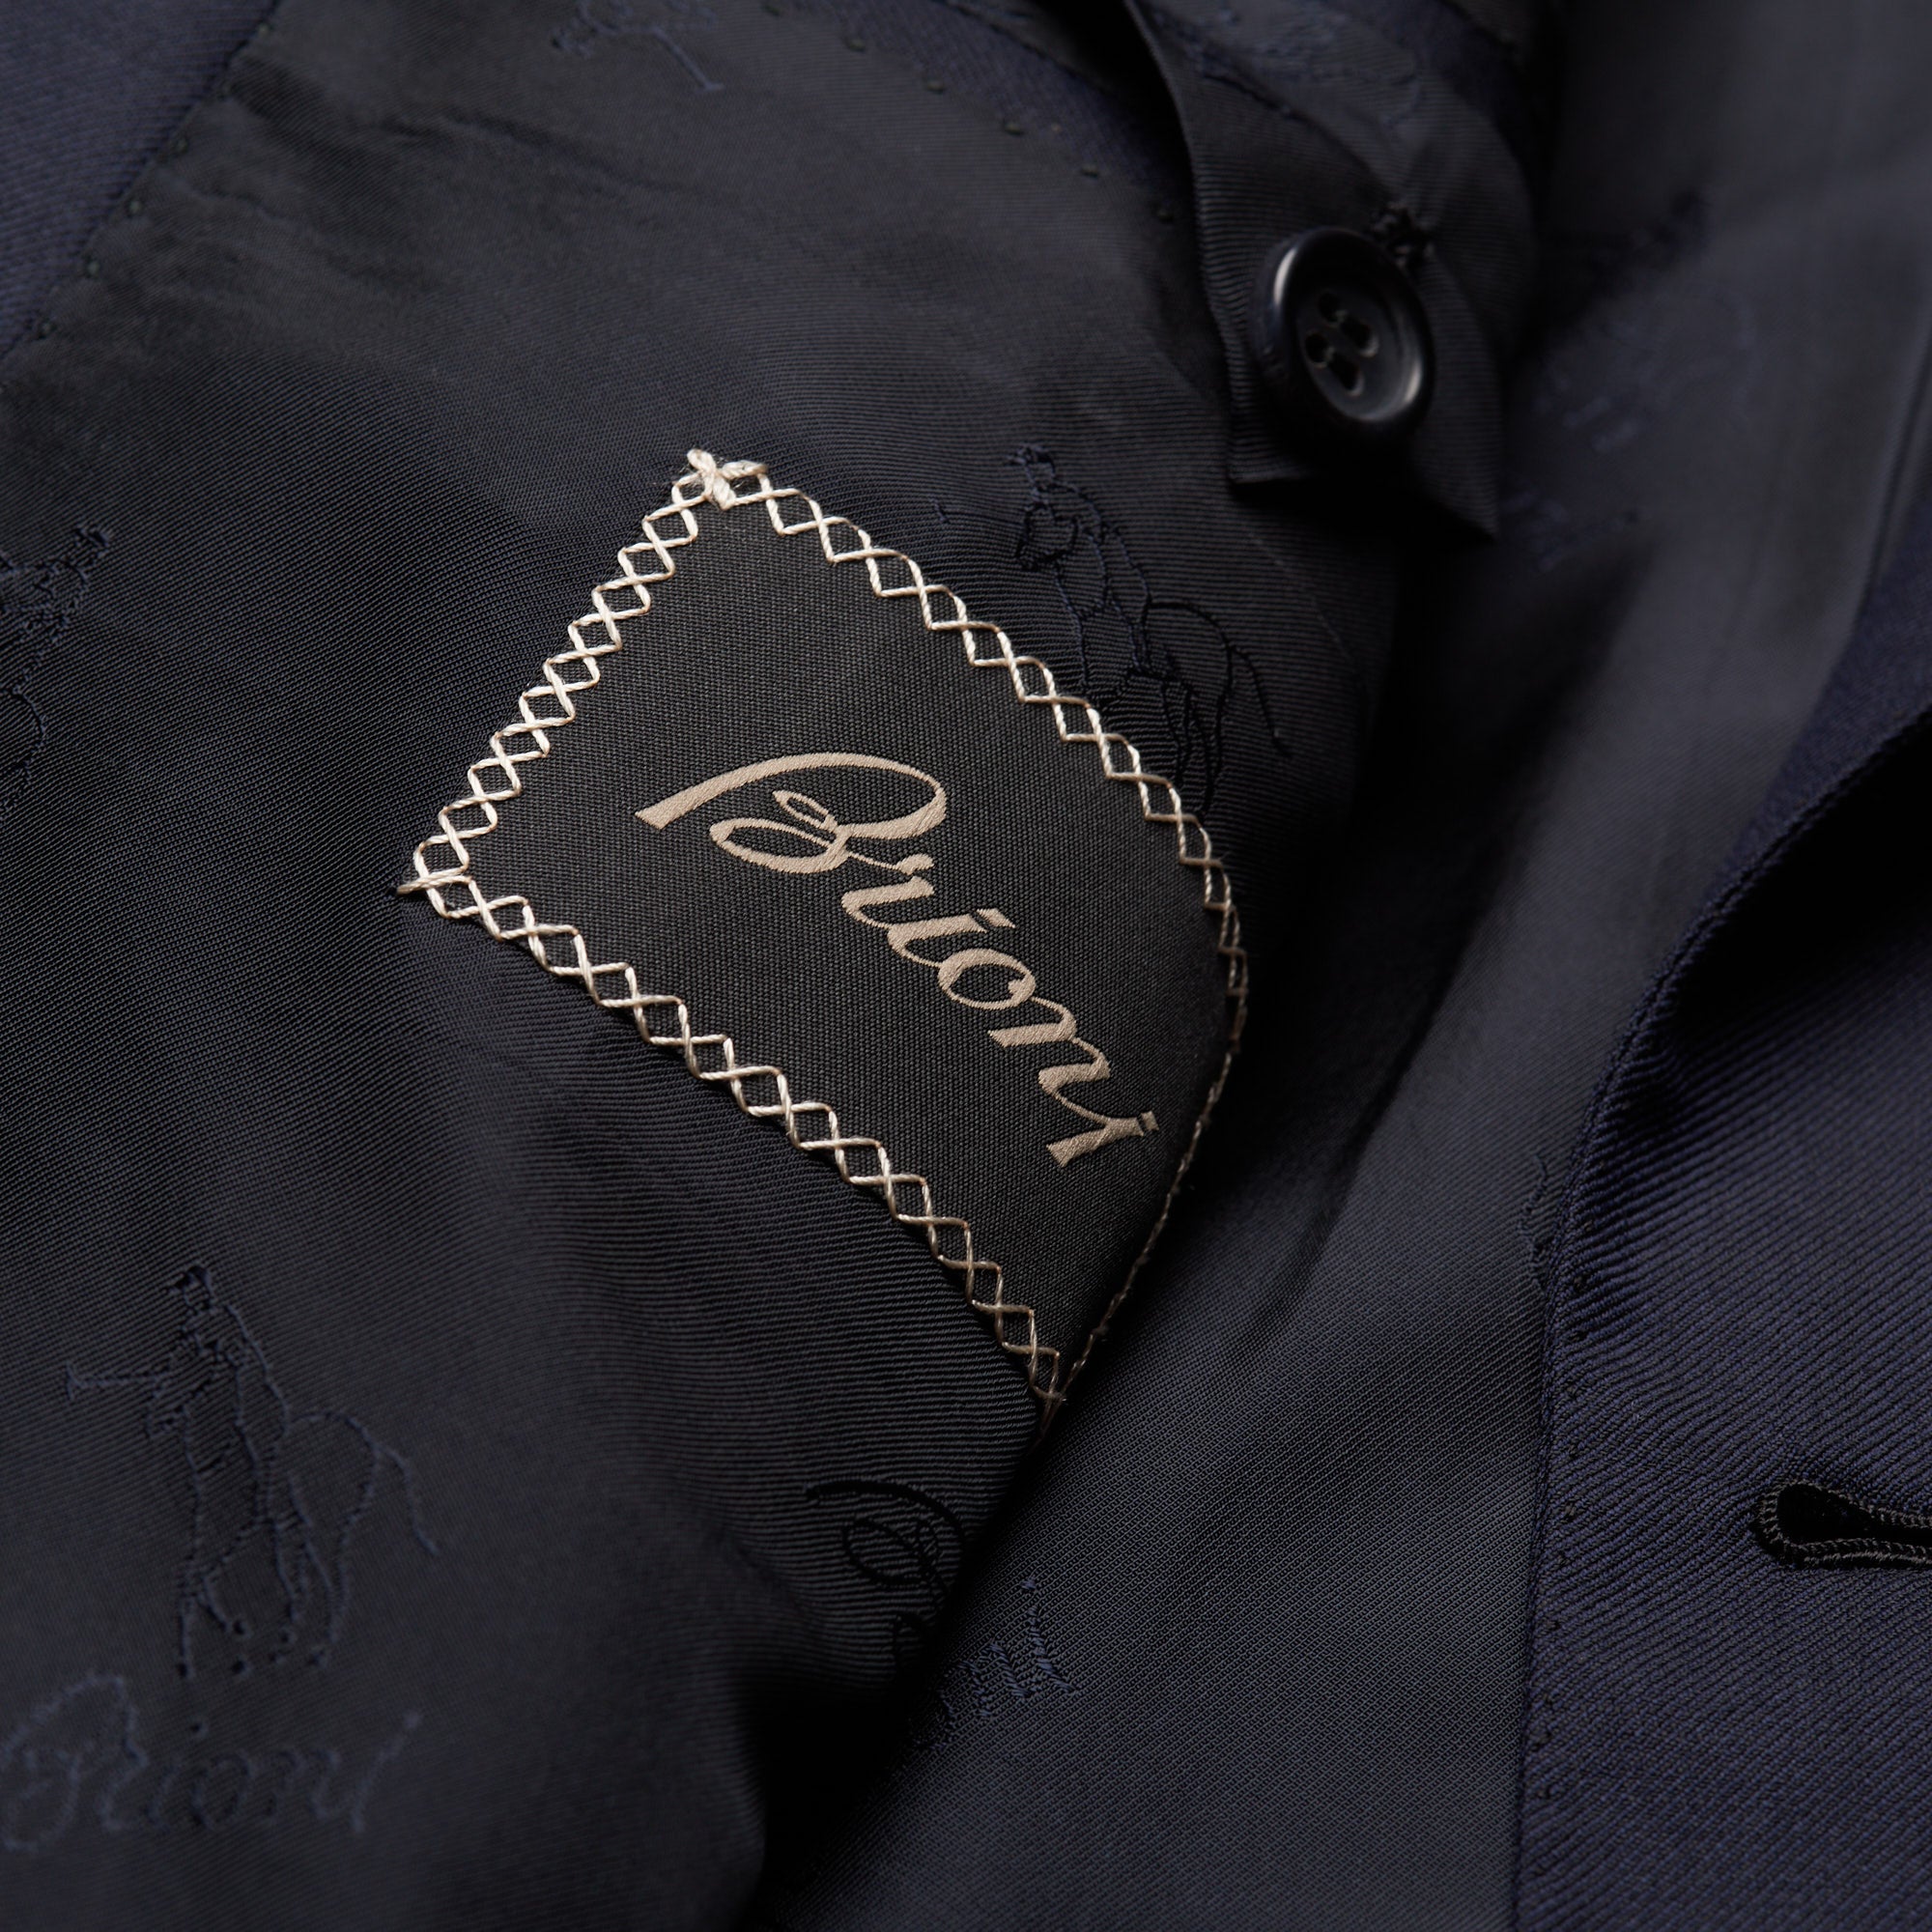 BRIONI "BRUNICO" Handmade Dark Navy Blue Wool Business Suit EU 62 NEW US 52